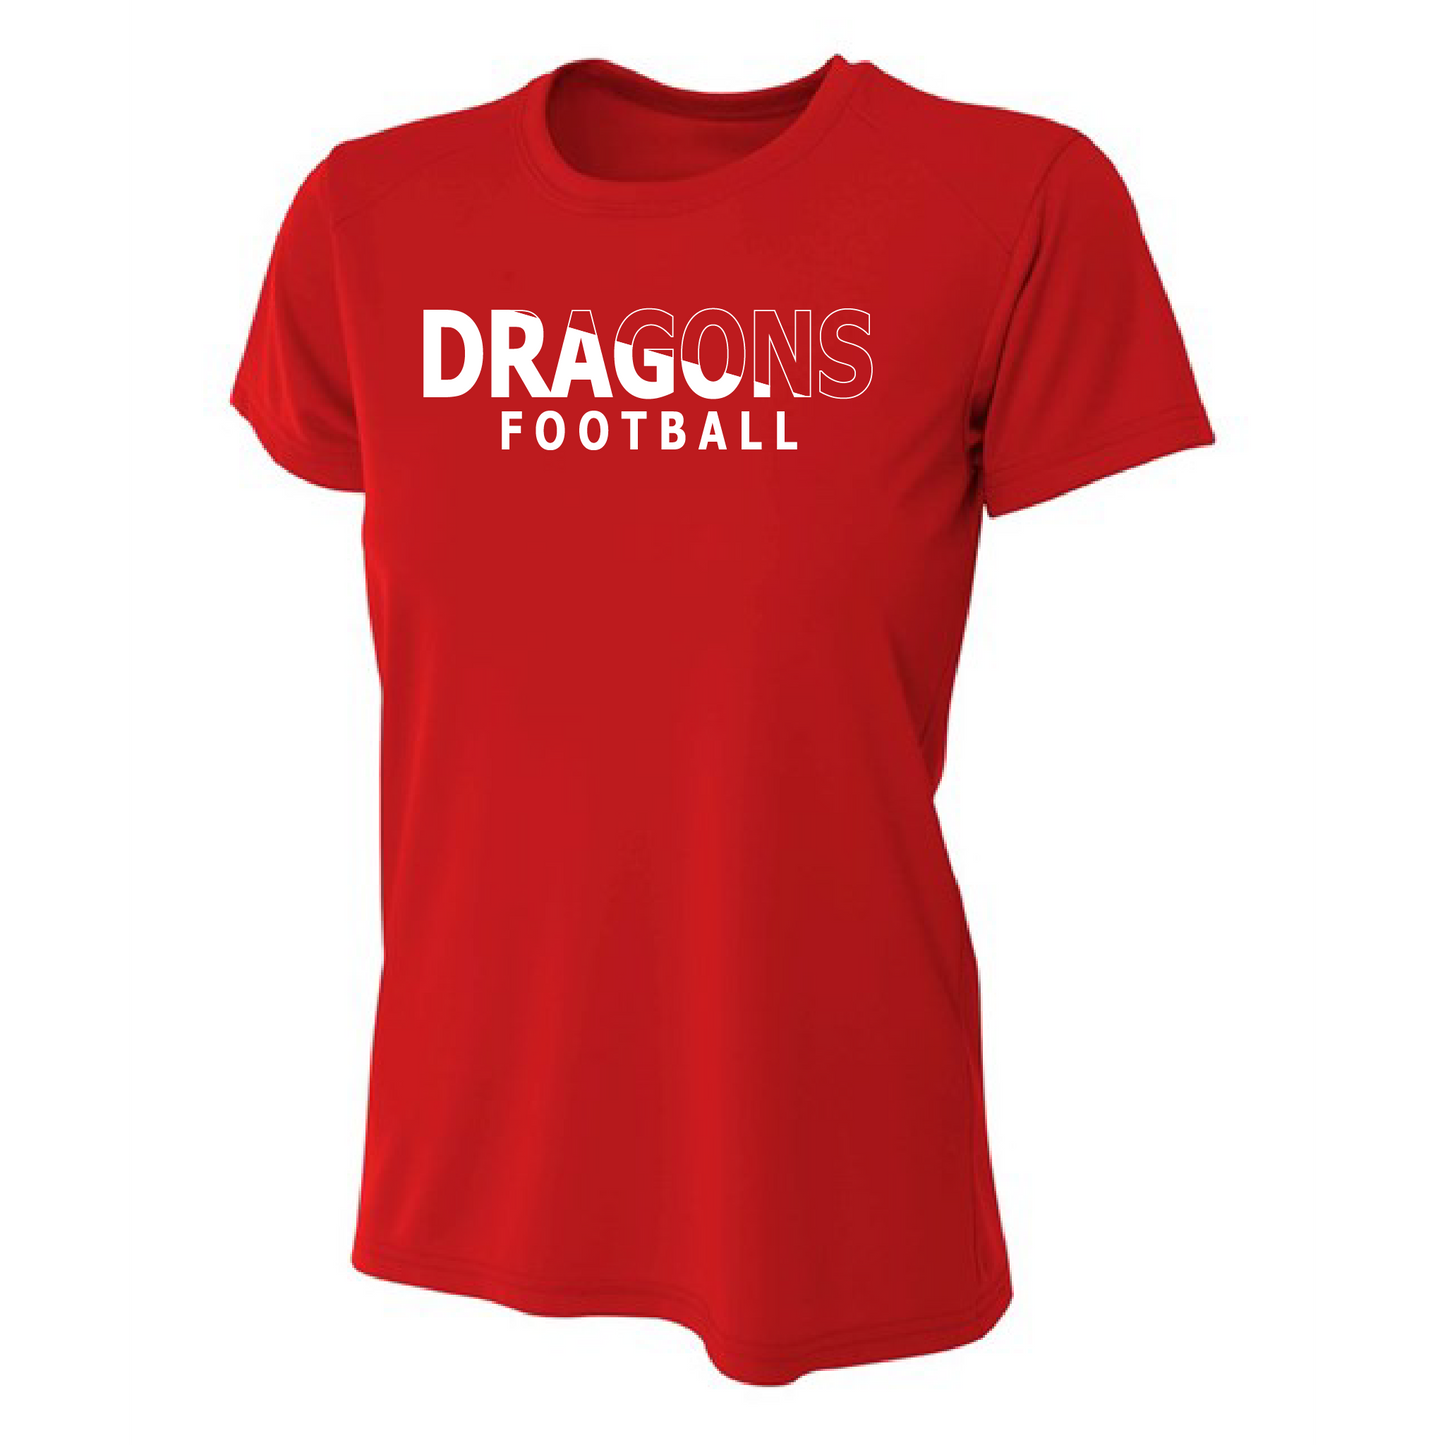 Womens Short Sleeve T-Shirt - White Dragons Football Slashed